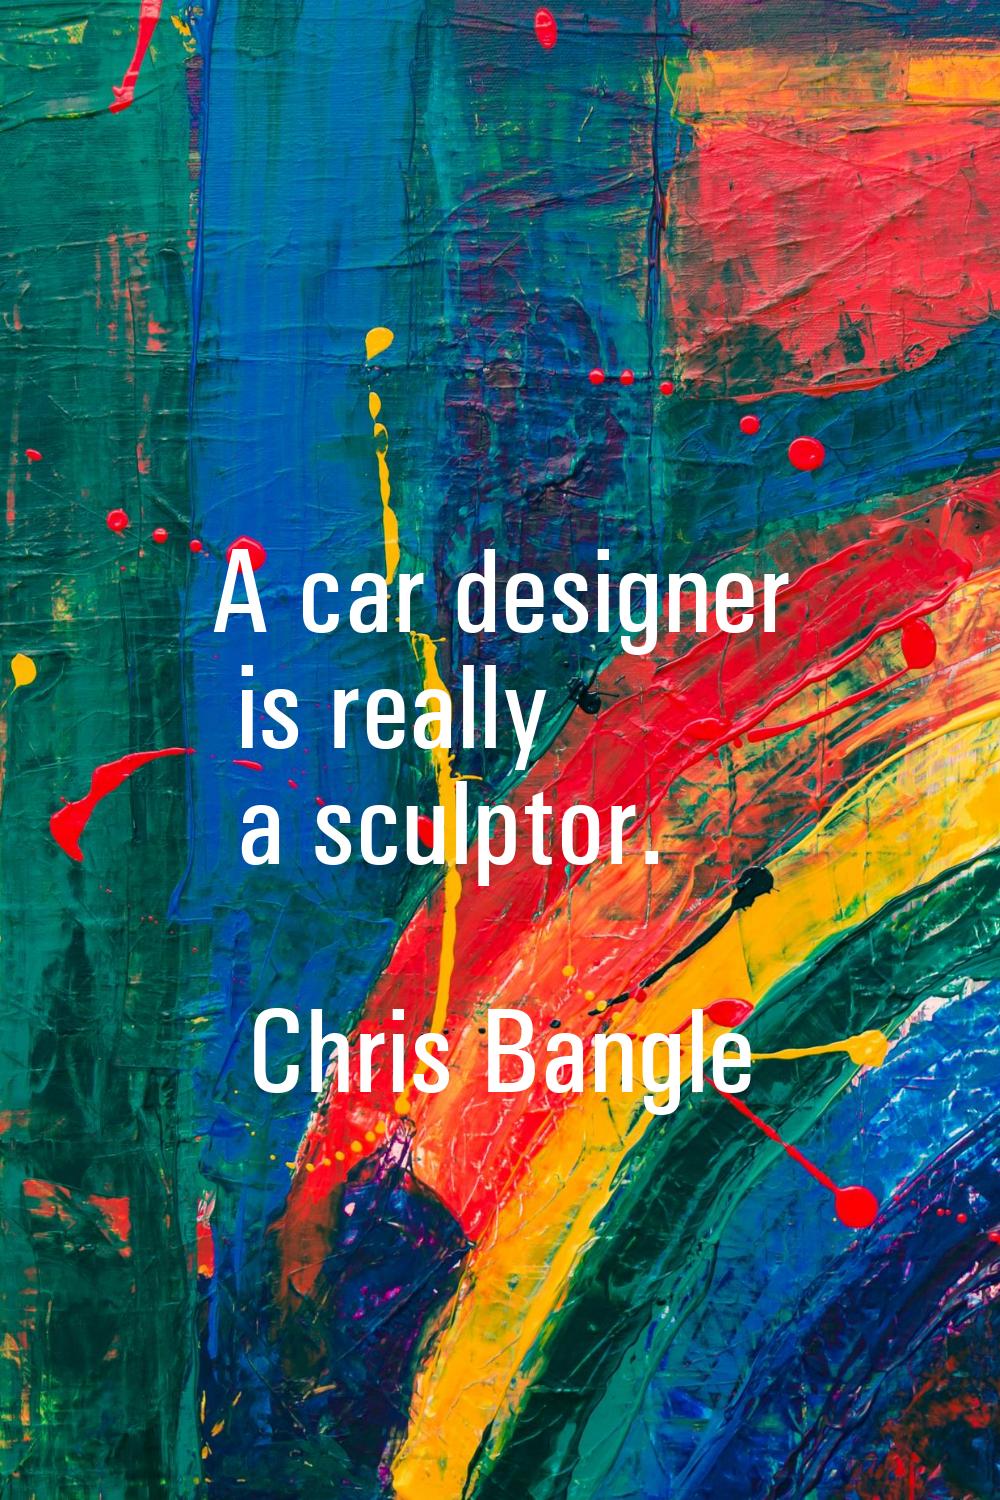 A car designer is really a sculptor.